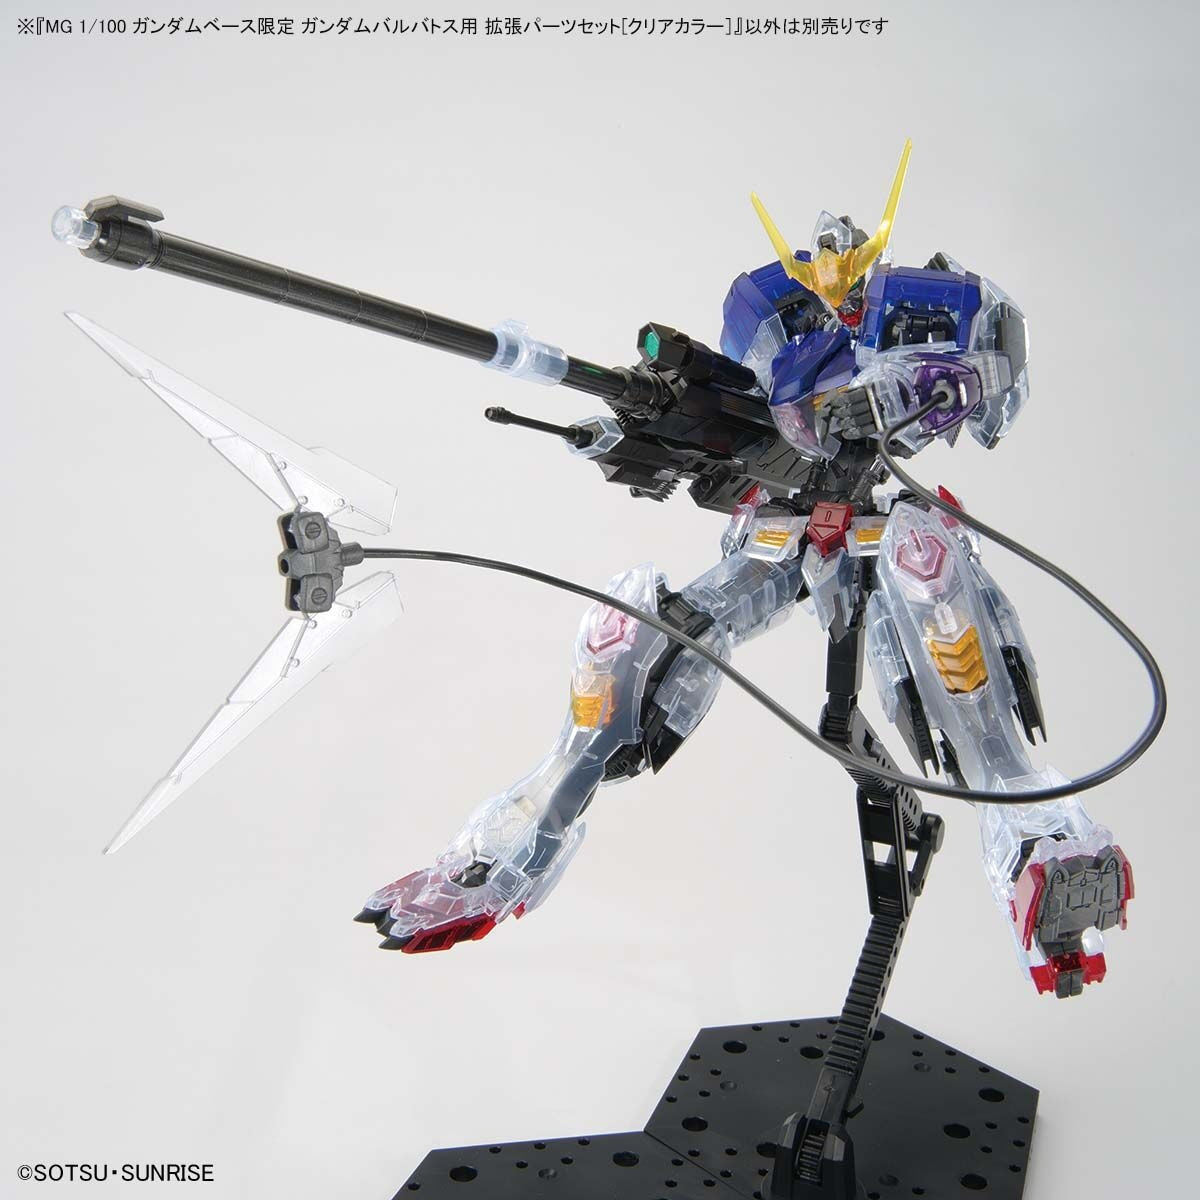 Gundam Base Limited MG 1/100 Expansion parts set for Gundam Barbatos Clear color